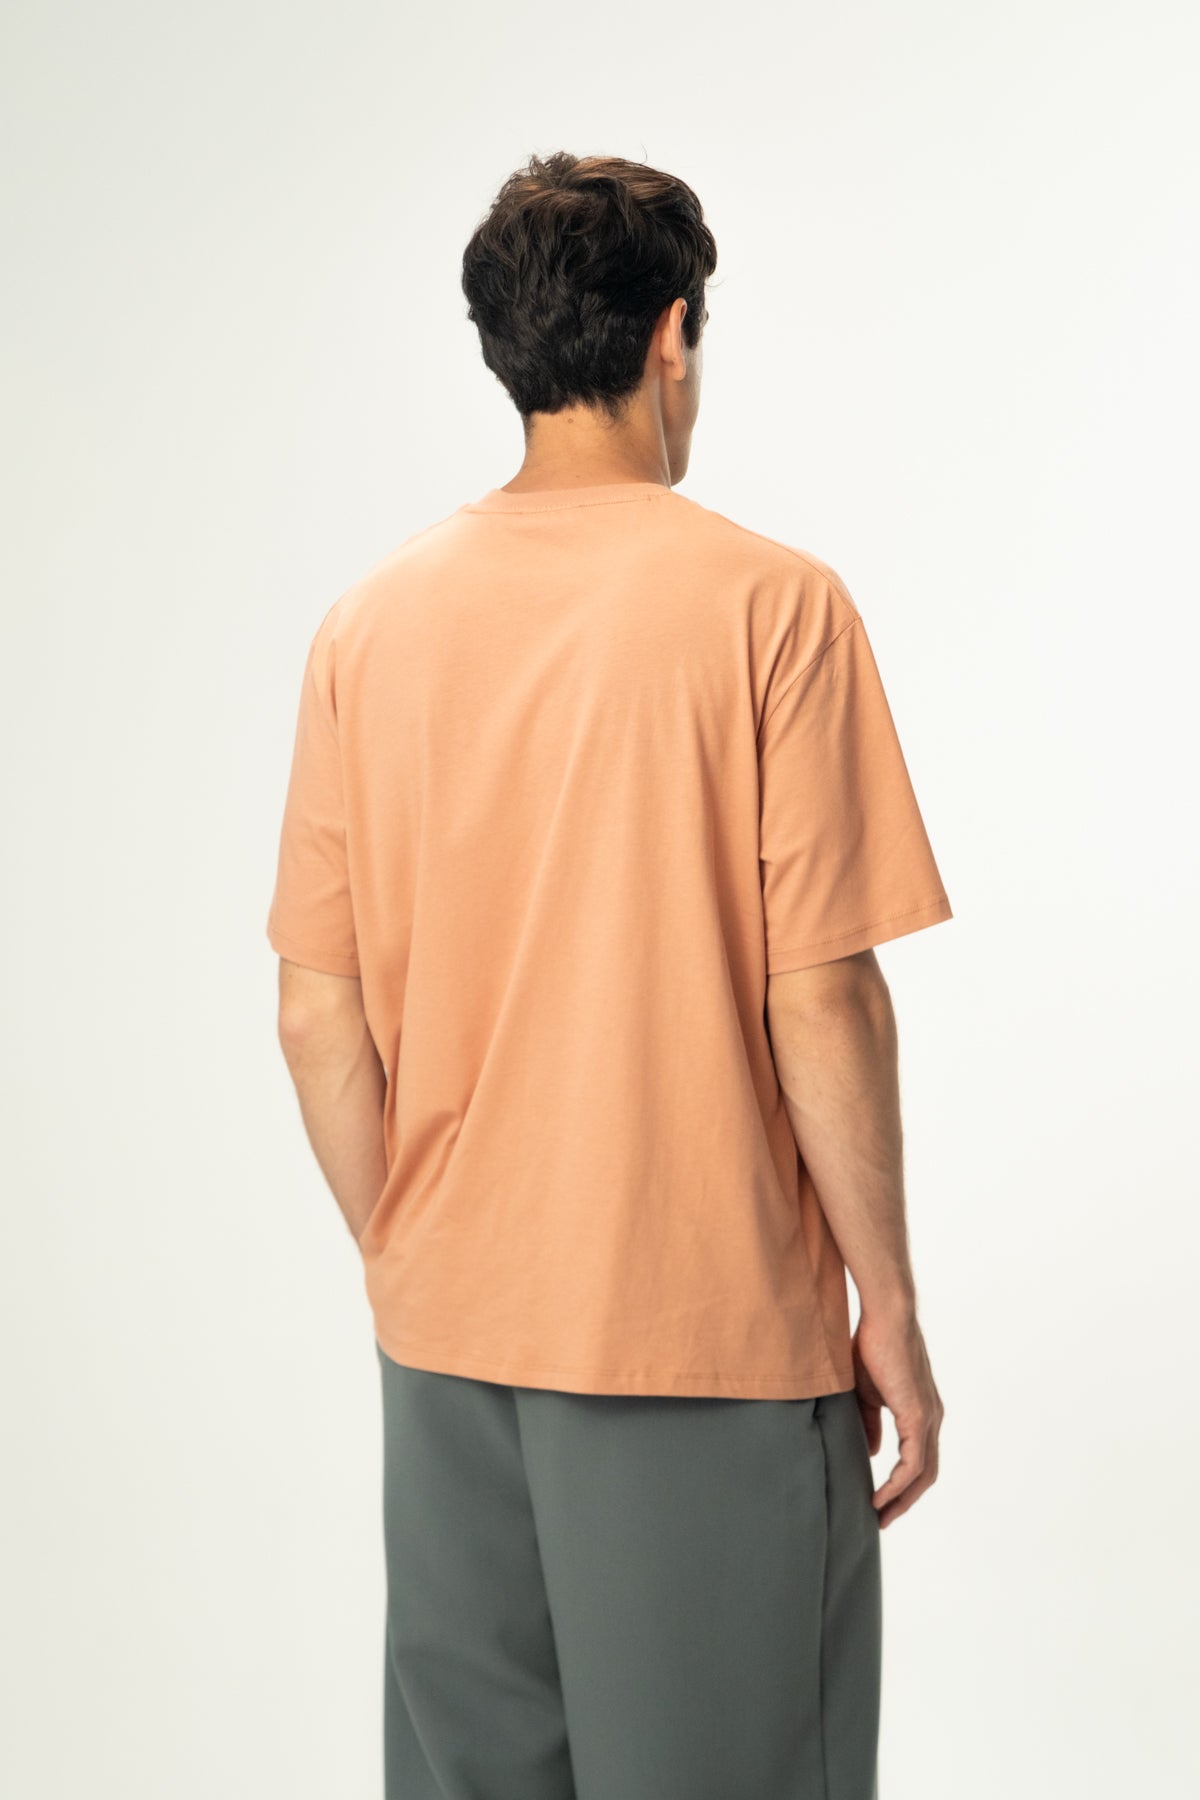 Kızıl Tilki Soft Supreme Oversize T-shirt - Toprak Rengi